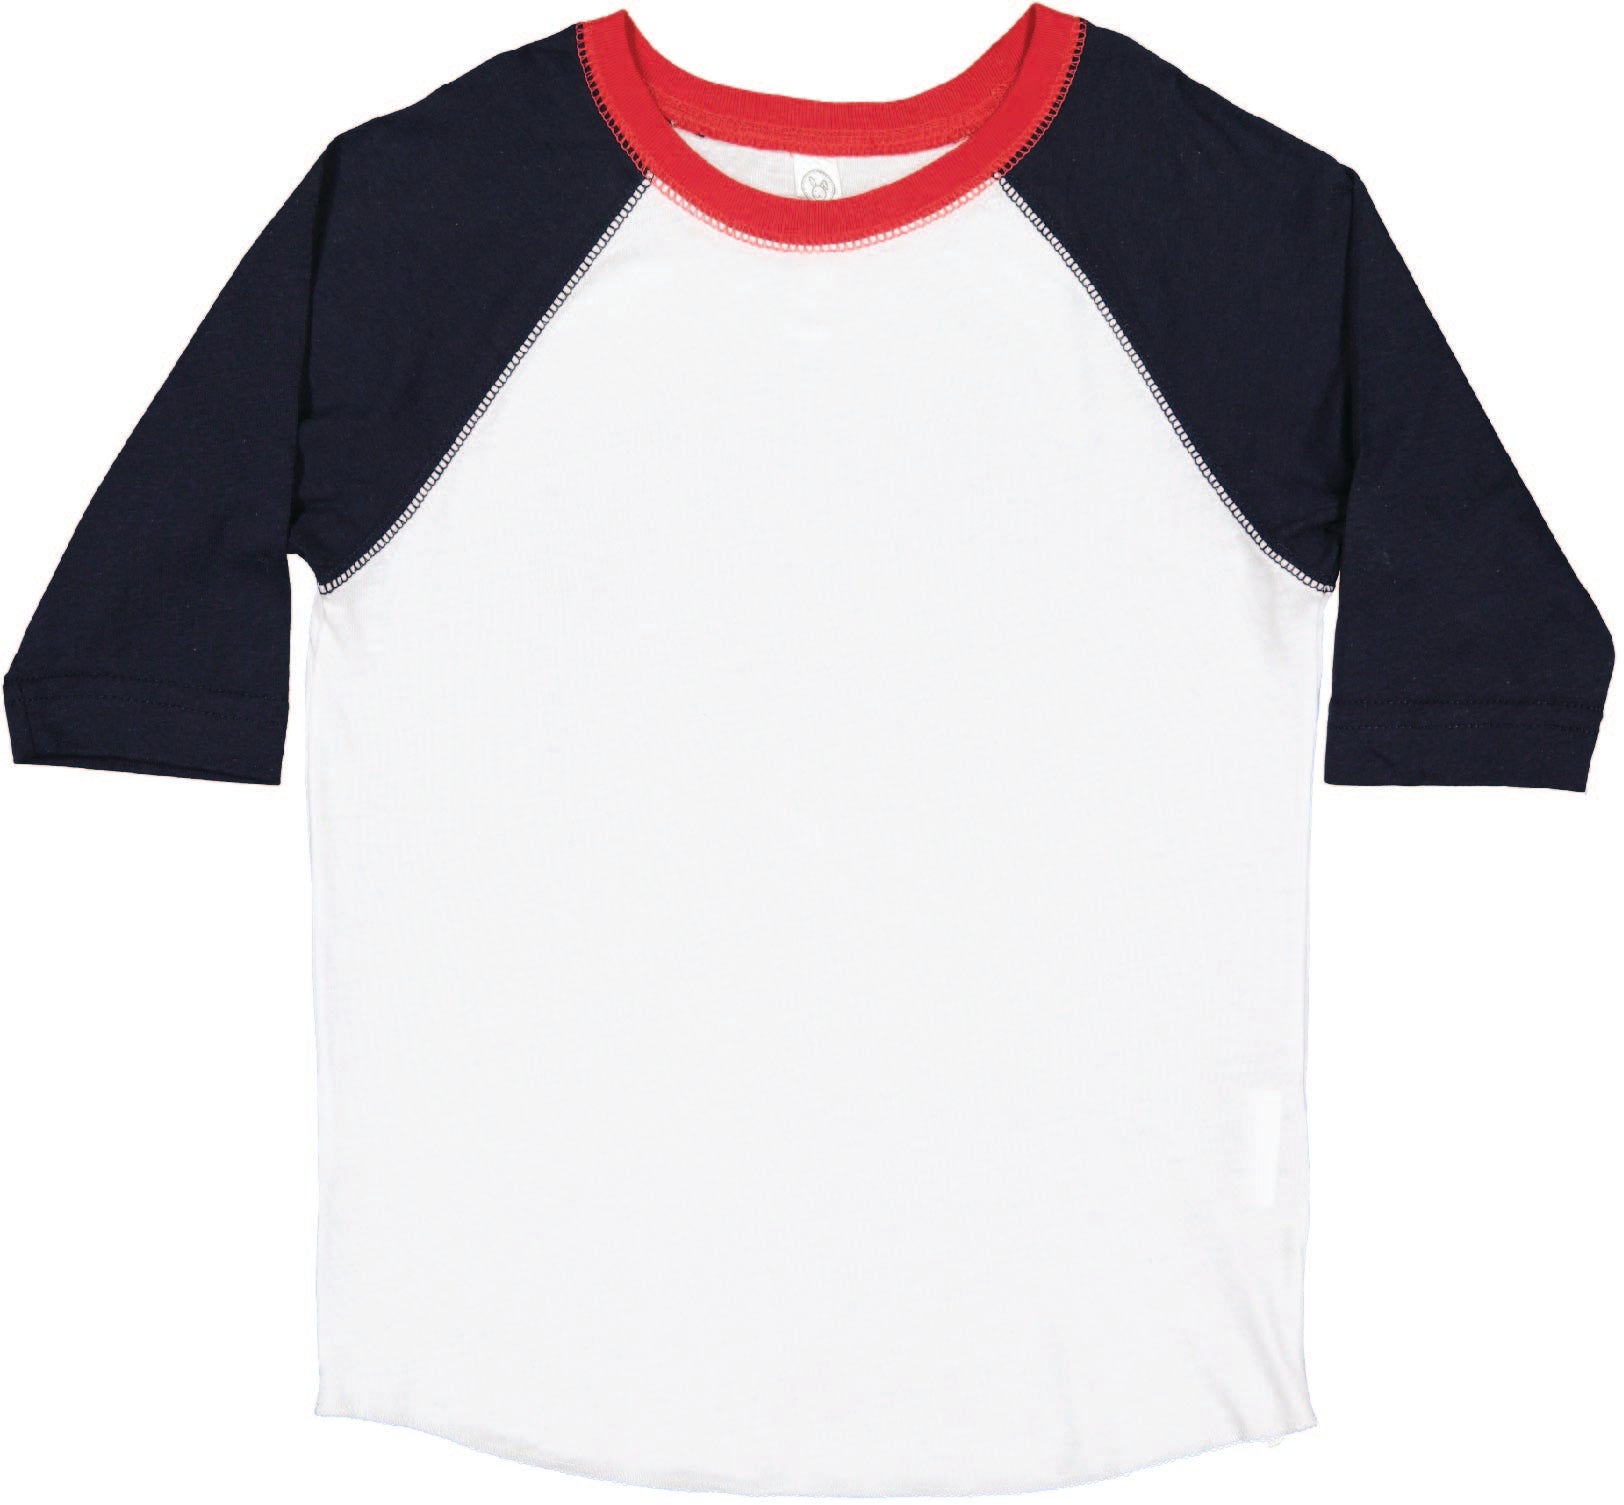 Toddler (Unisex) Raglan Baseball T-Shirt  (White / Navy / Red)